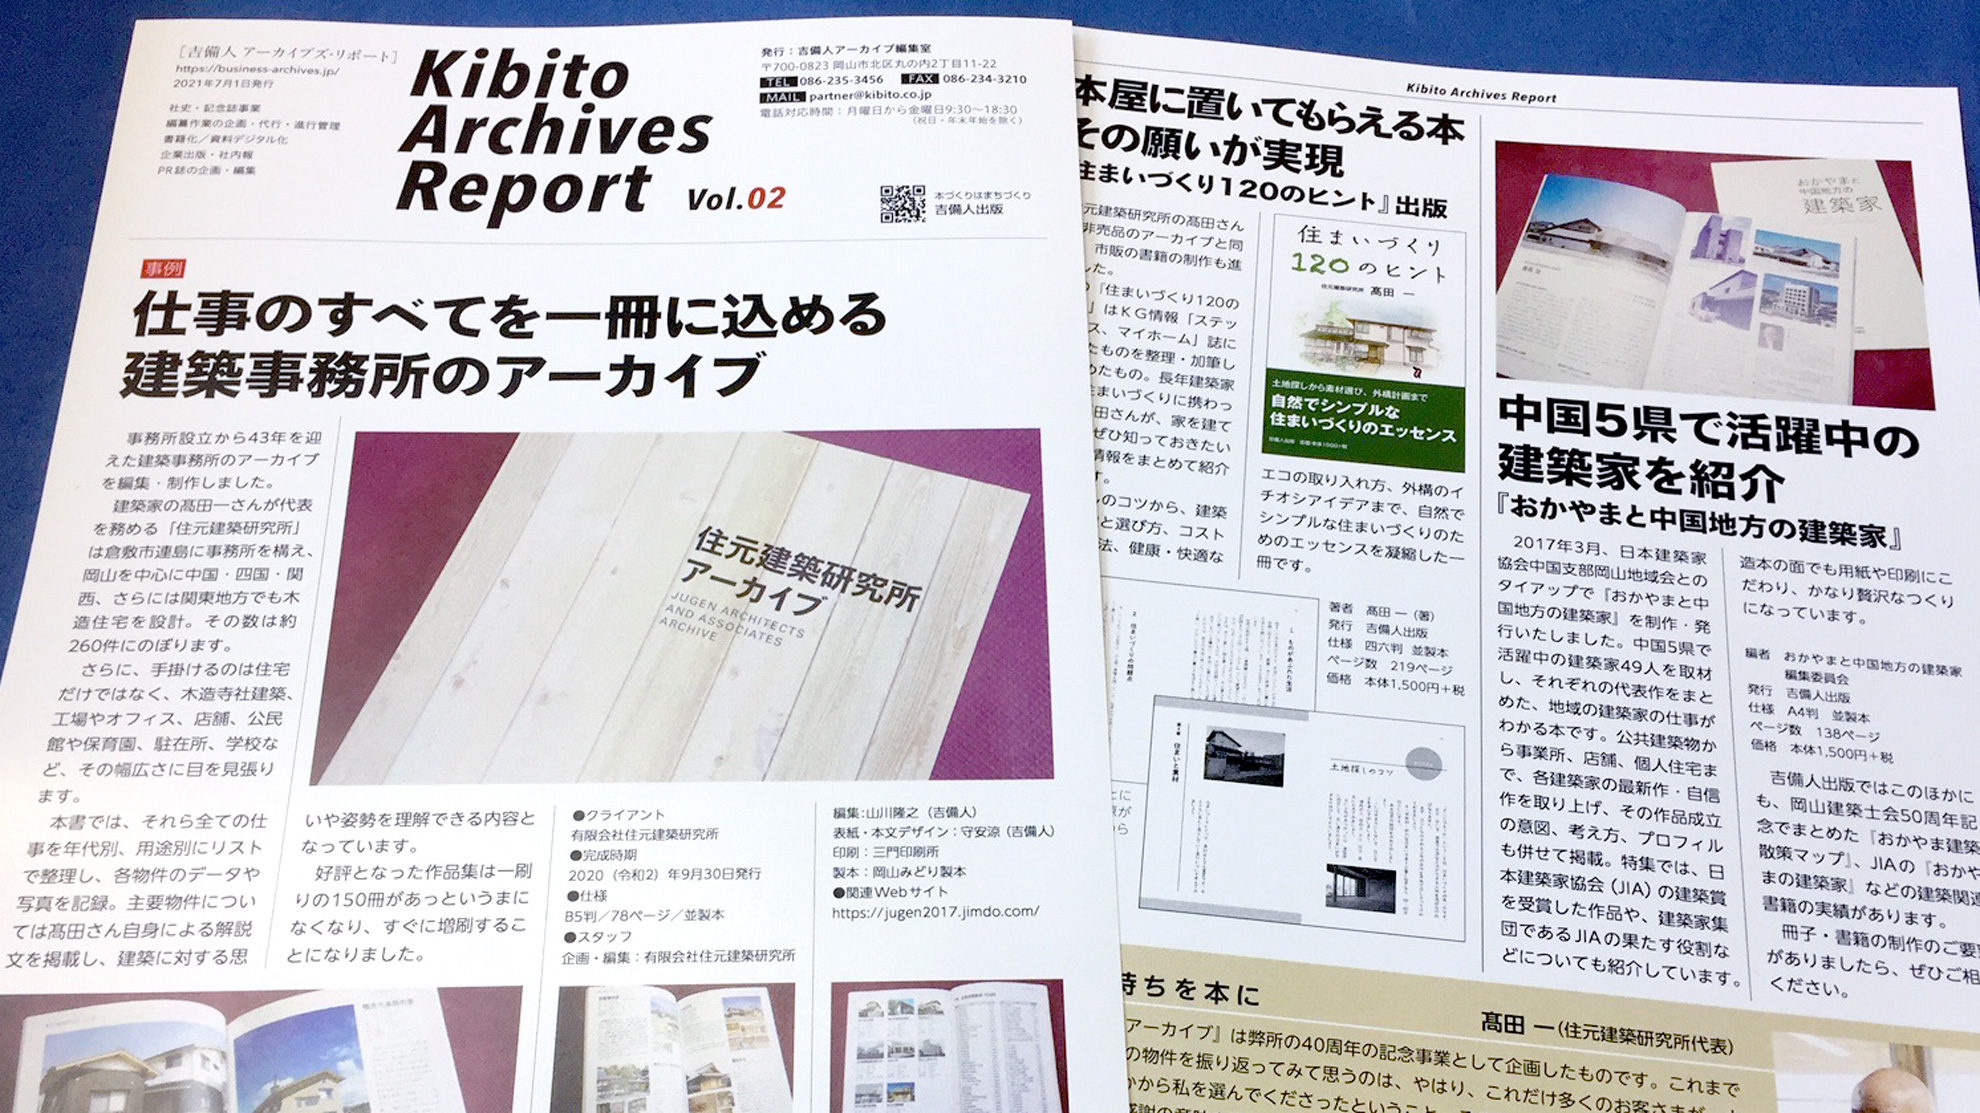 Kibito Archives Report vol.2 ができました。